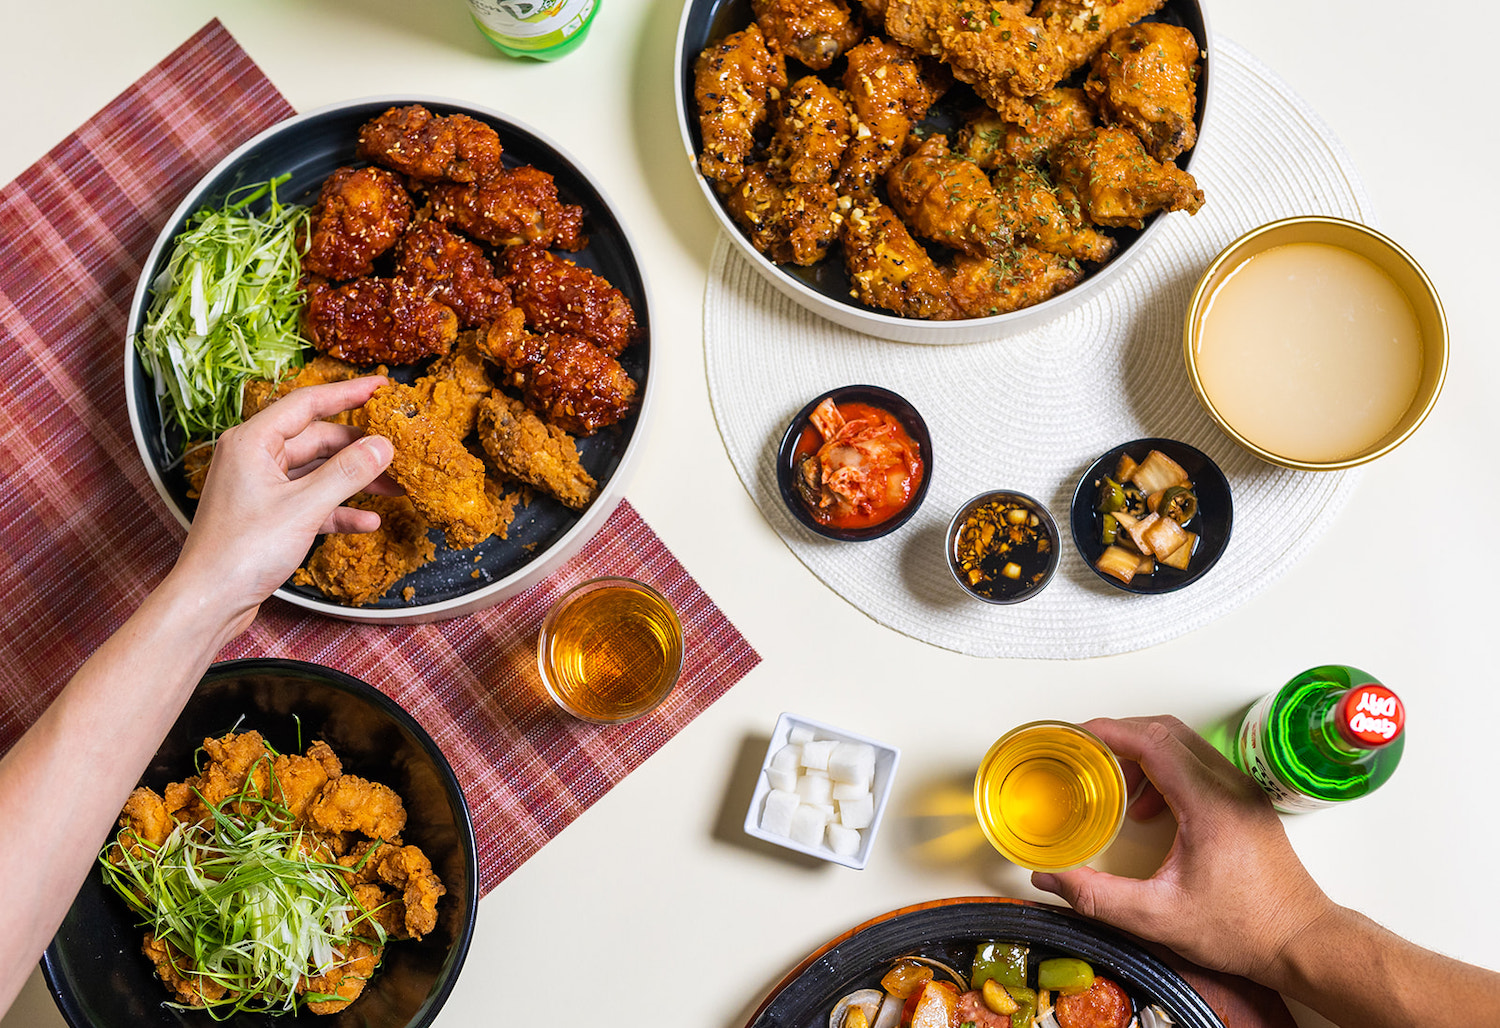 Food from Korean restaurant Honeyjam Korean Chicken & Beer that opened in University City, San Diego